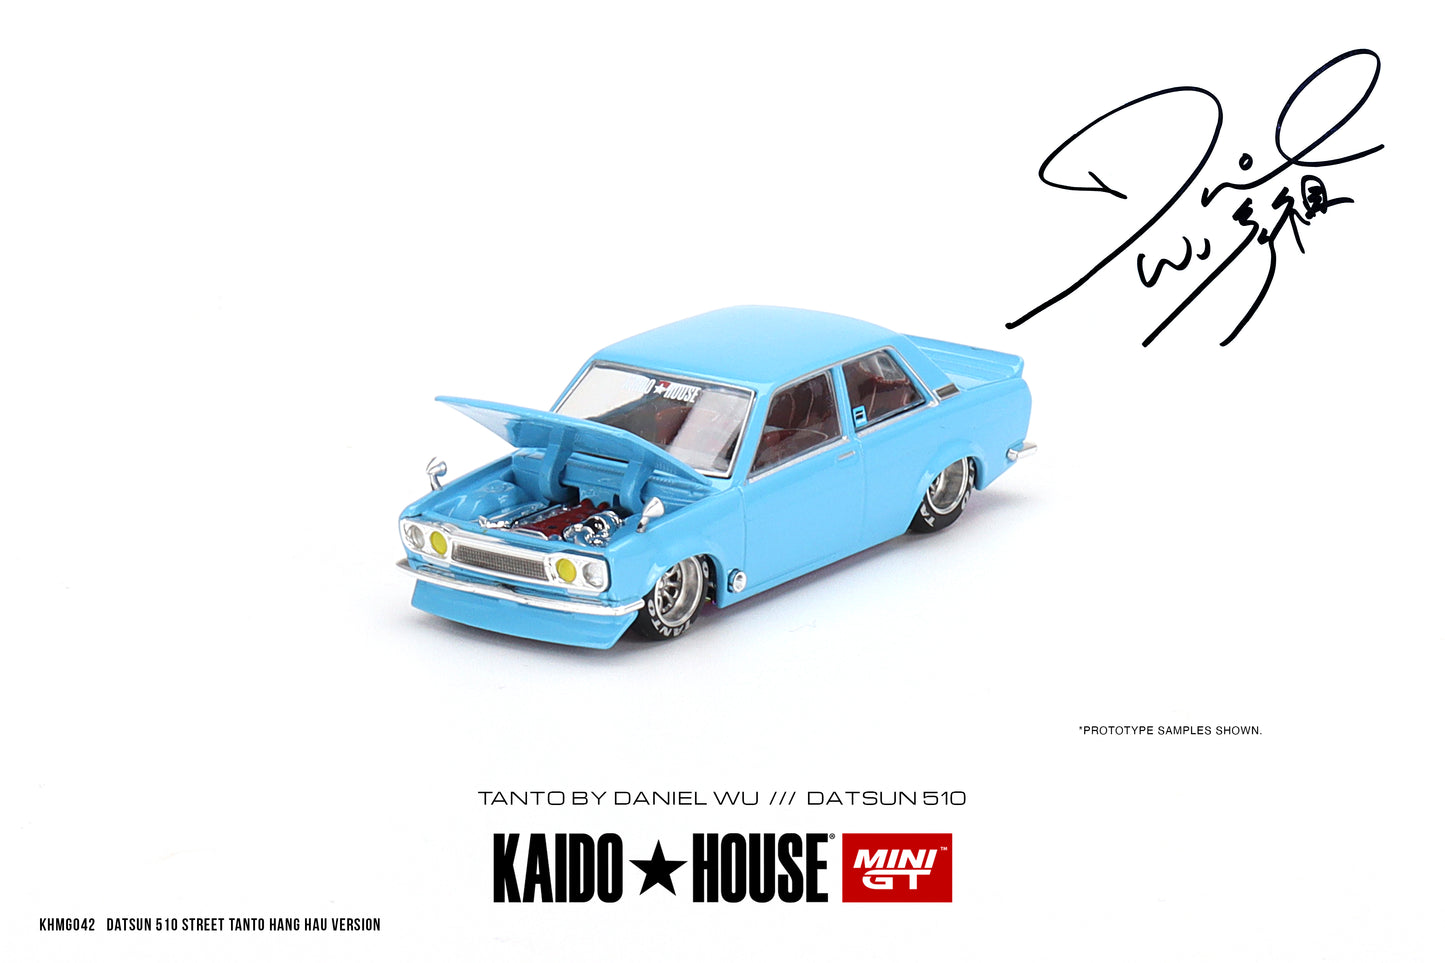 Mini GT x Kaido House 1/64 Datsun 510 Street Tanto V2 By Daniel Wu - Baby Blue